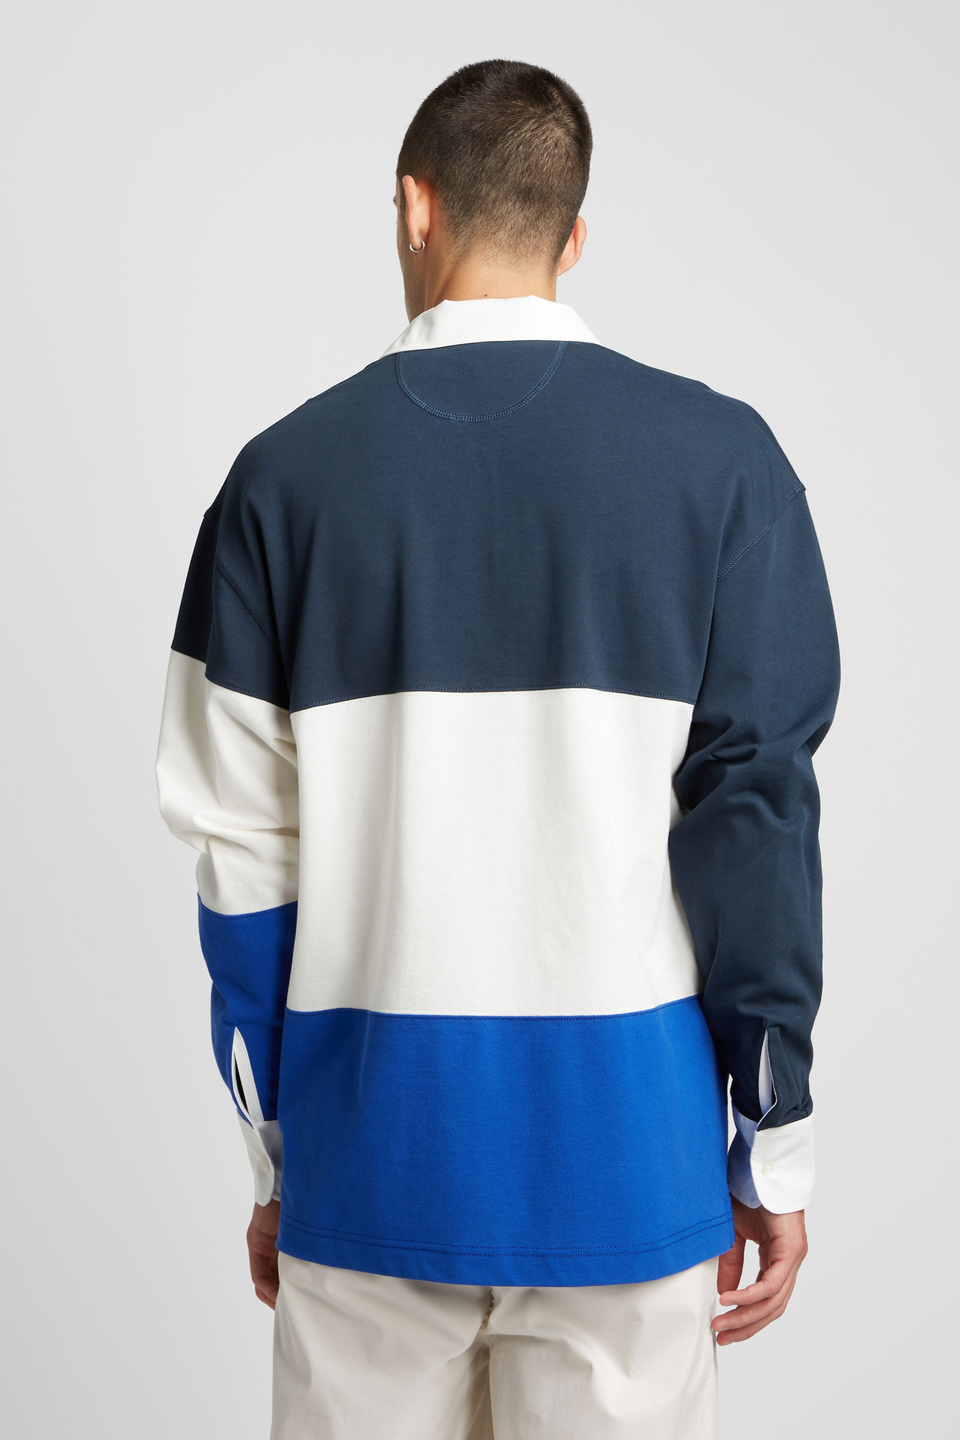 Herren-Poloshirt aus Piqué mit langem Arm, oversized Modell | La Martina - Official Online Shop